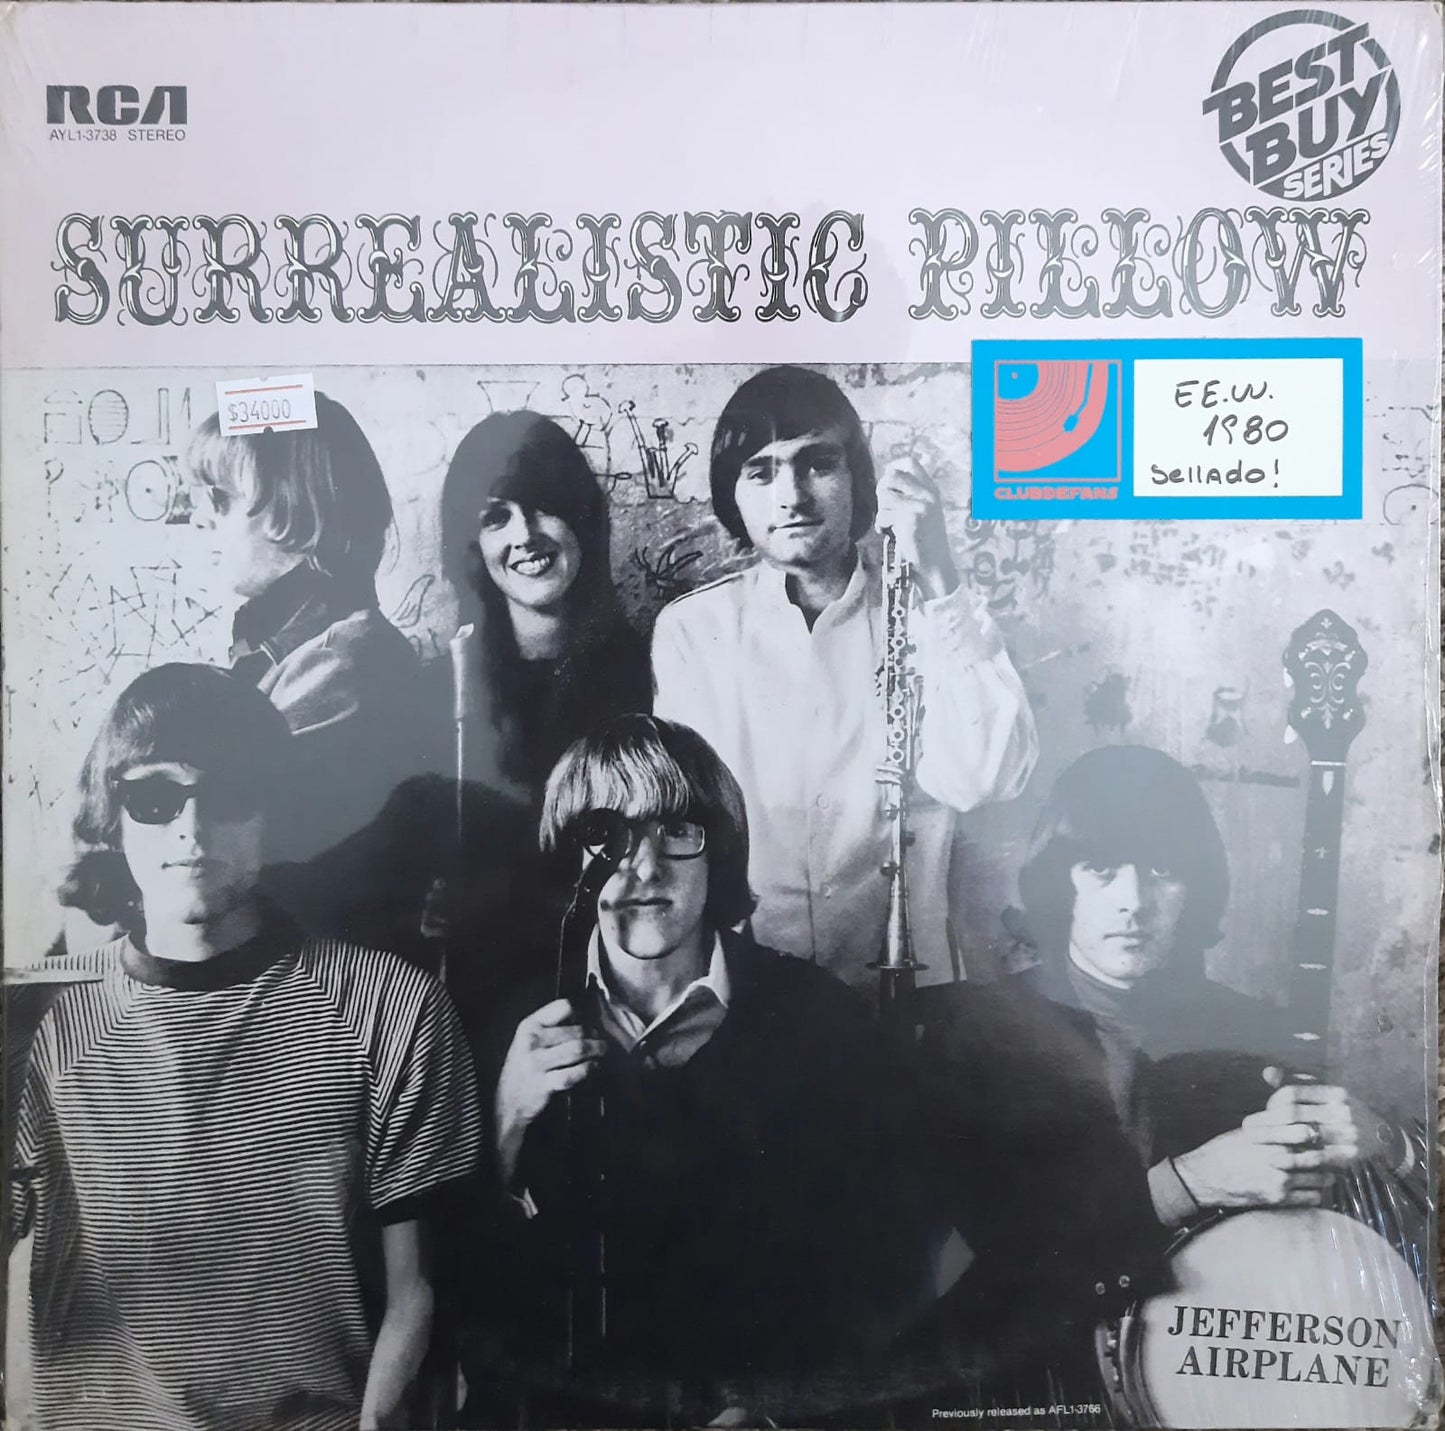 Jefferson Airplane - Surrealistic Pillow (LP, EE.UU., 1980)